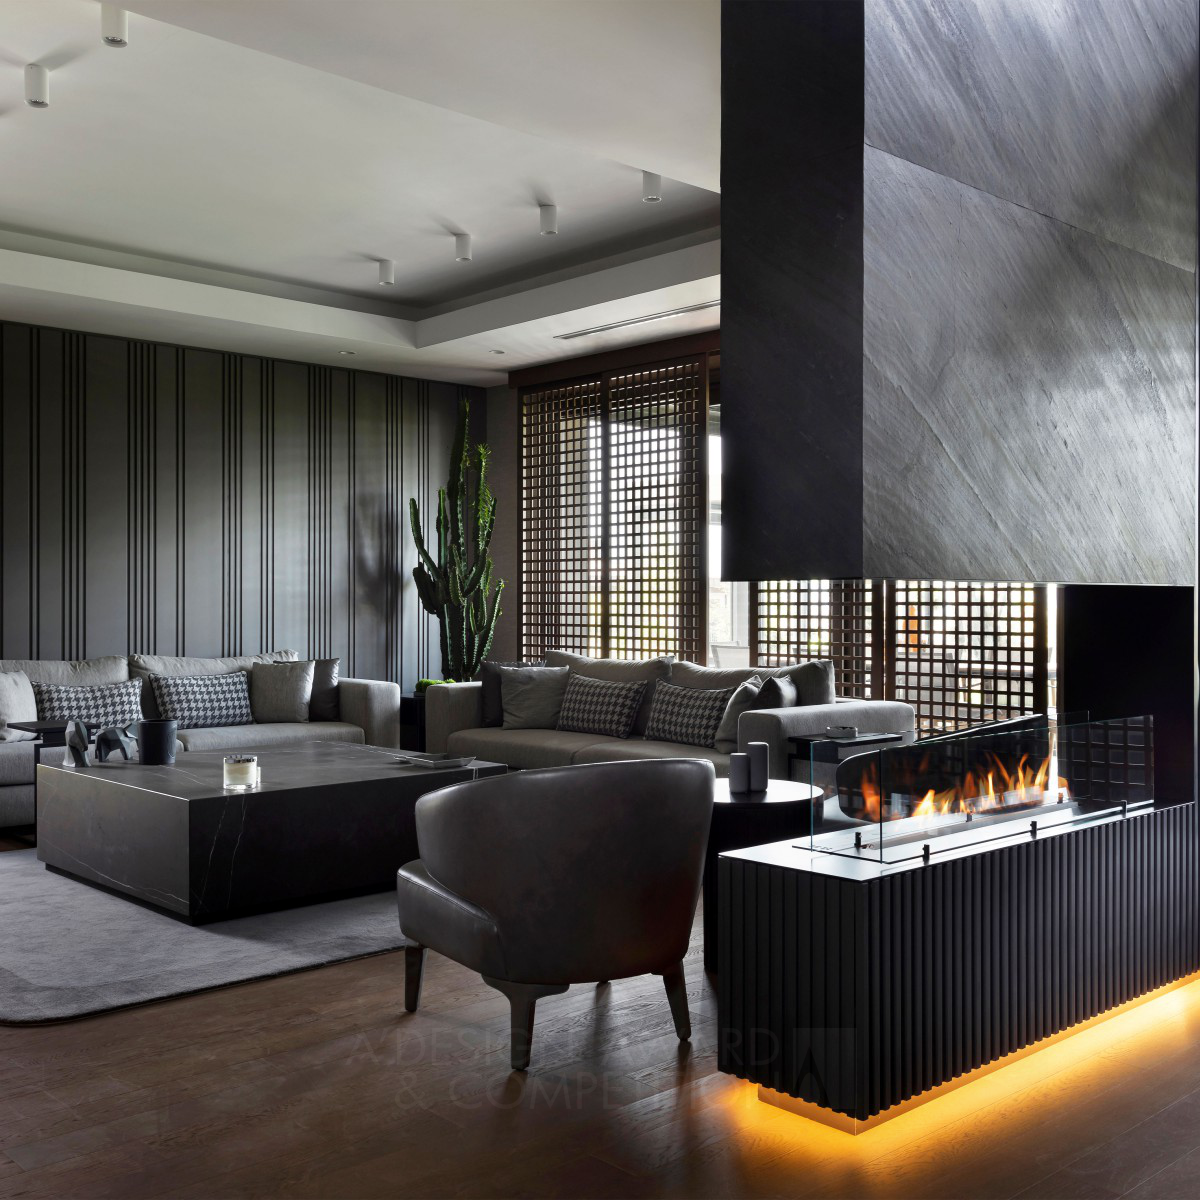 Emel Balcı wins Silver at the prestigious A' Interior Space, Retail and Exhibition Design Award with Monochrome Luxury Villa.